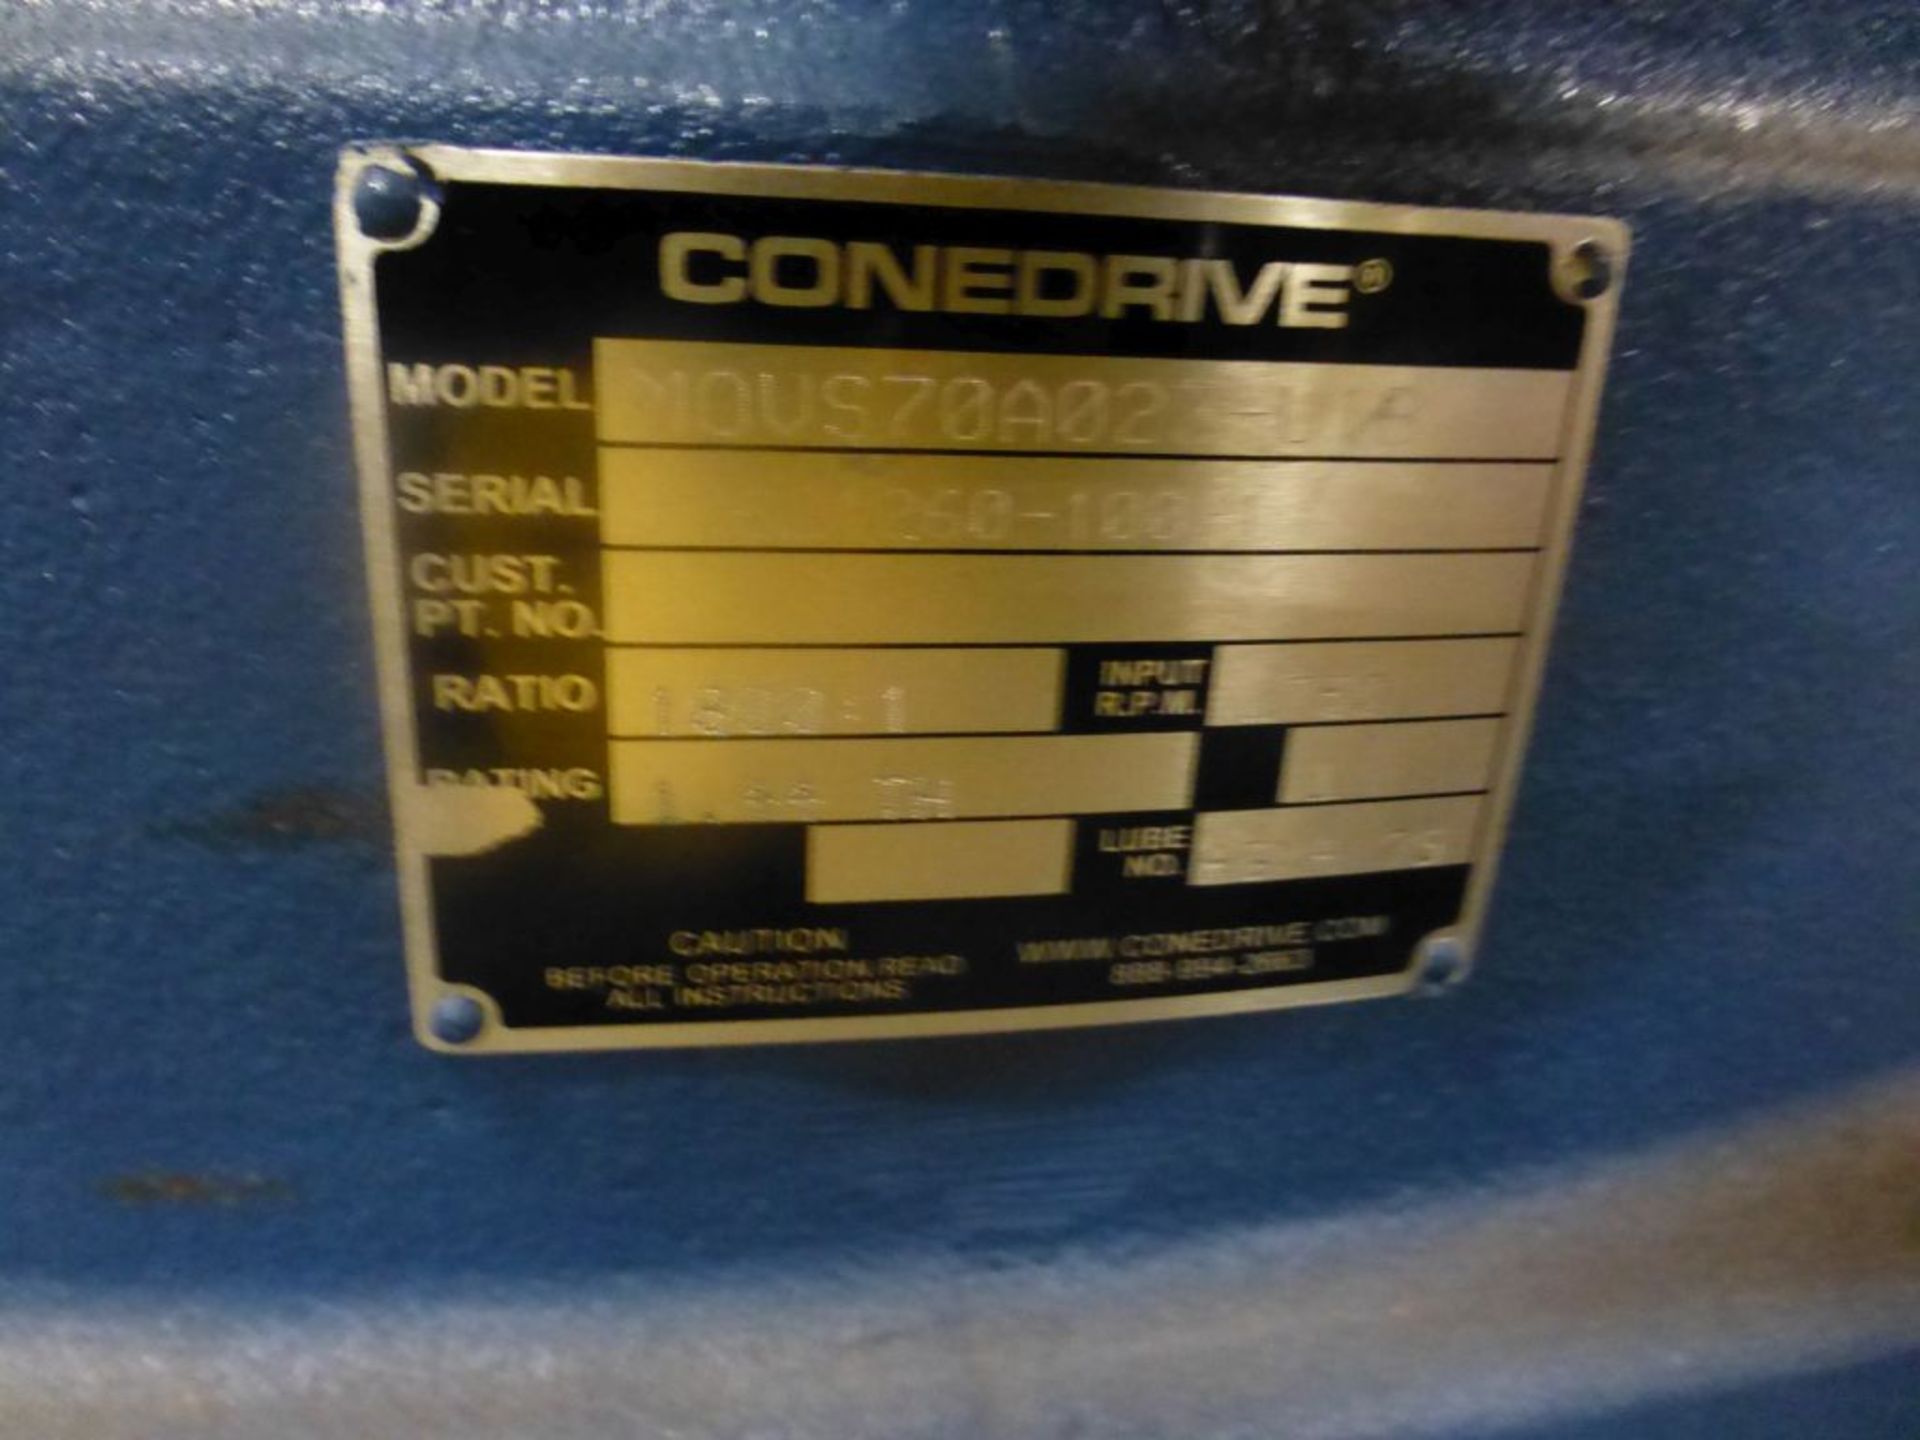 Conedrive - Model No. MOVS70A023-V16; 1750 RPM; New Surplus; Tag: 221496 - Image 6 of 7